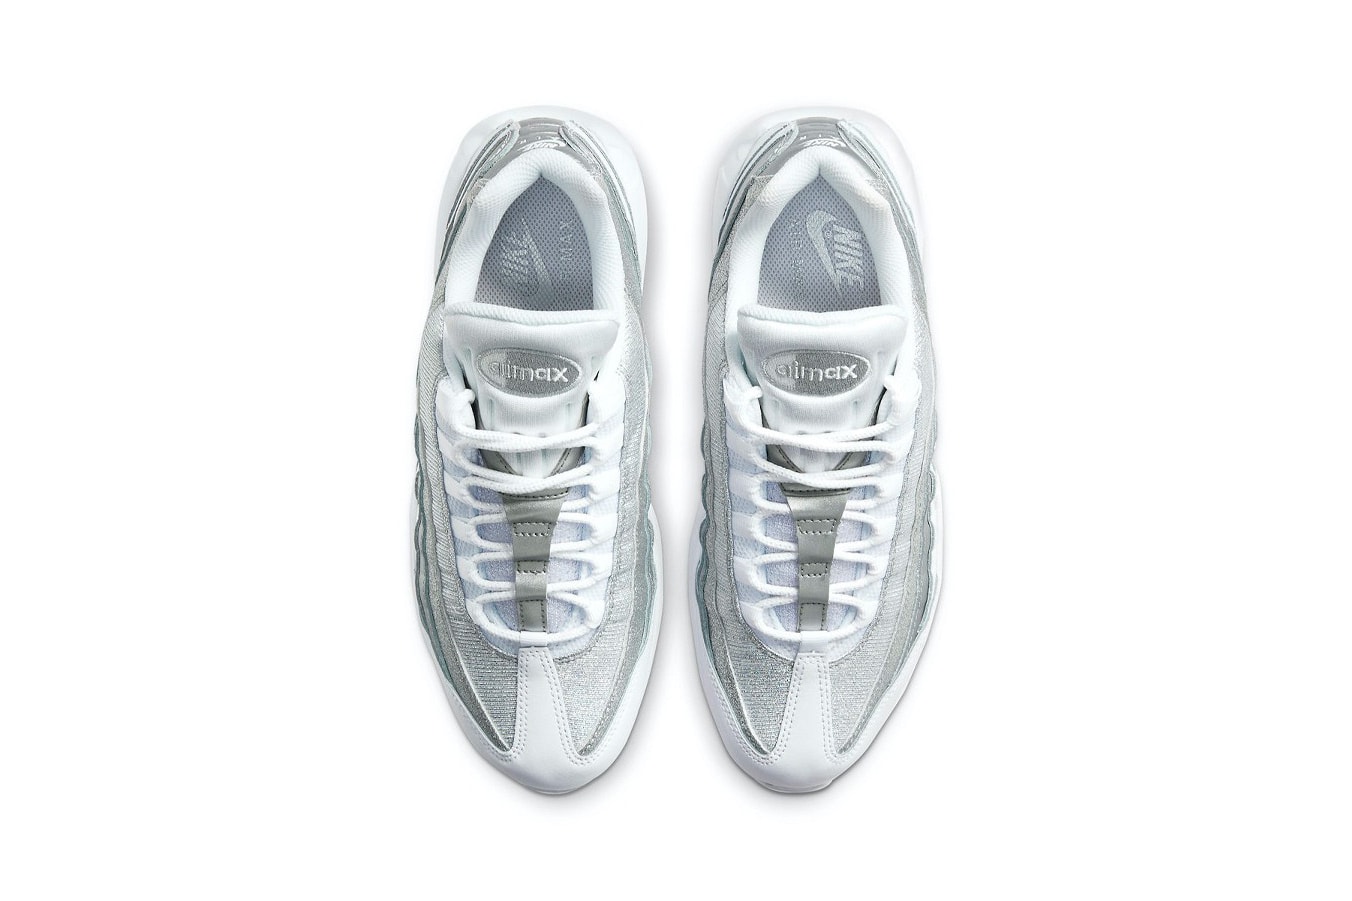 Nike Air Max 95 Silver White Metallic